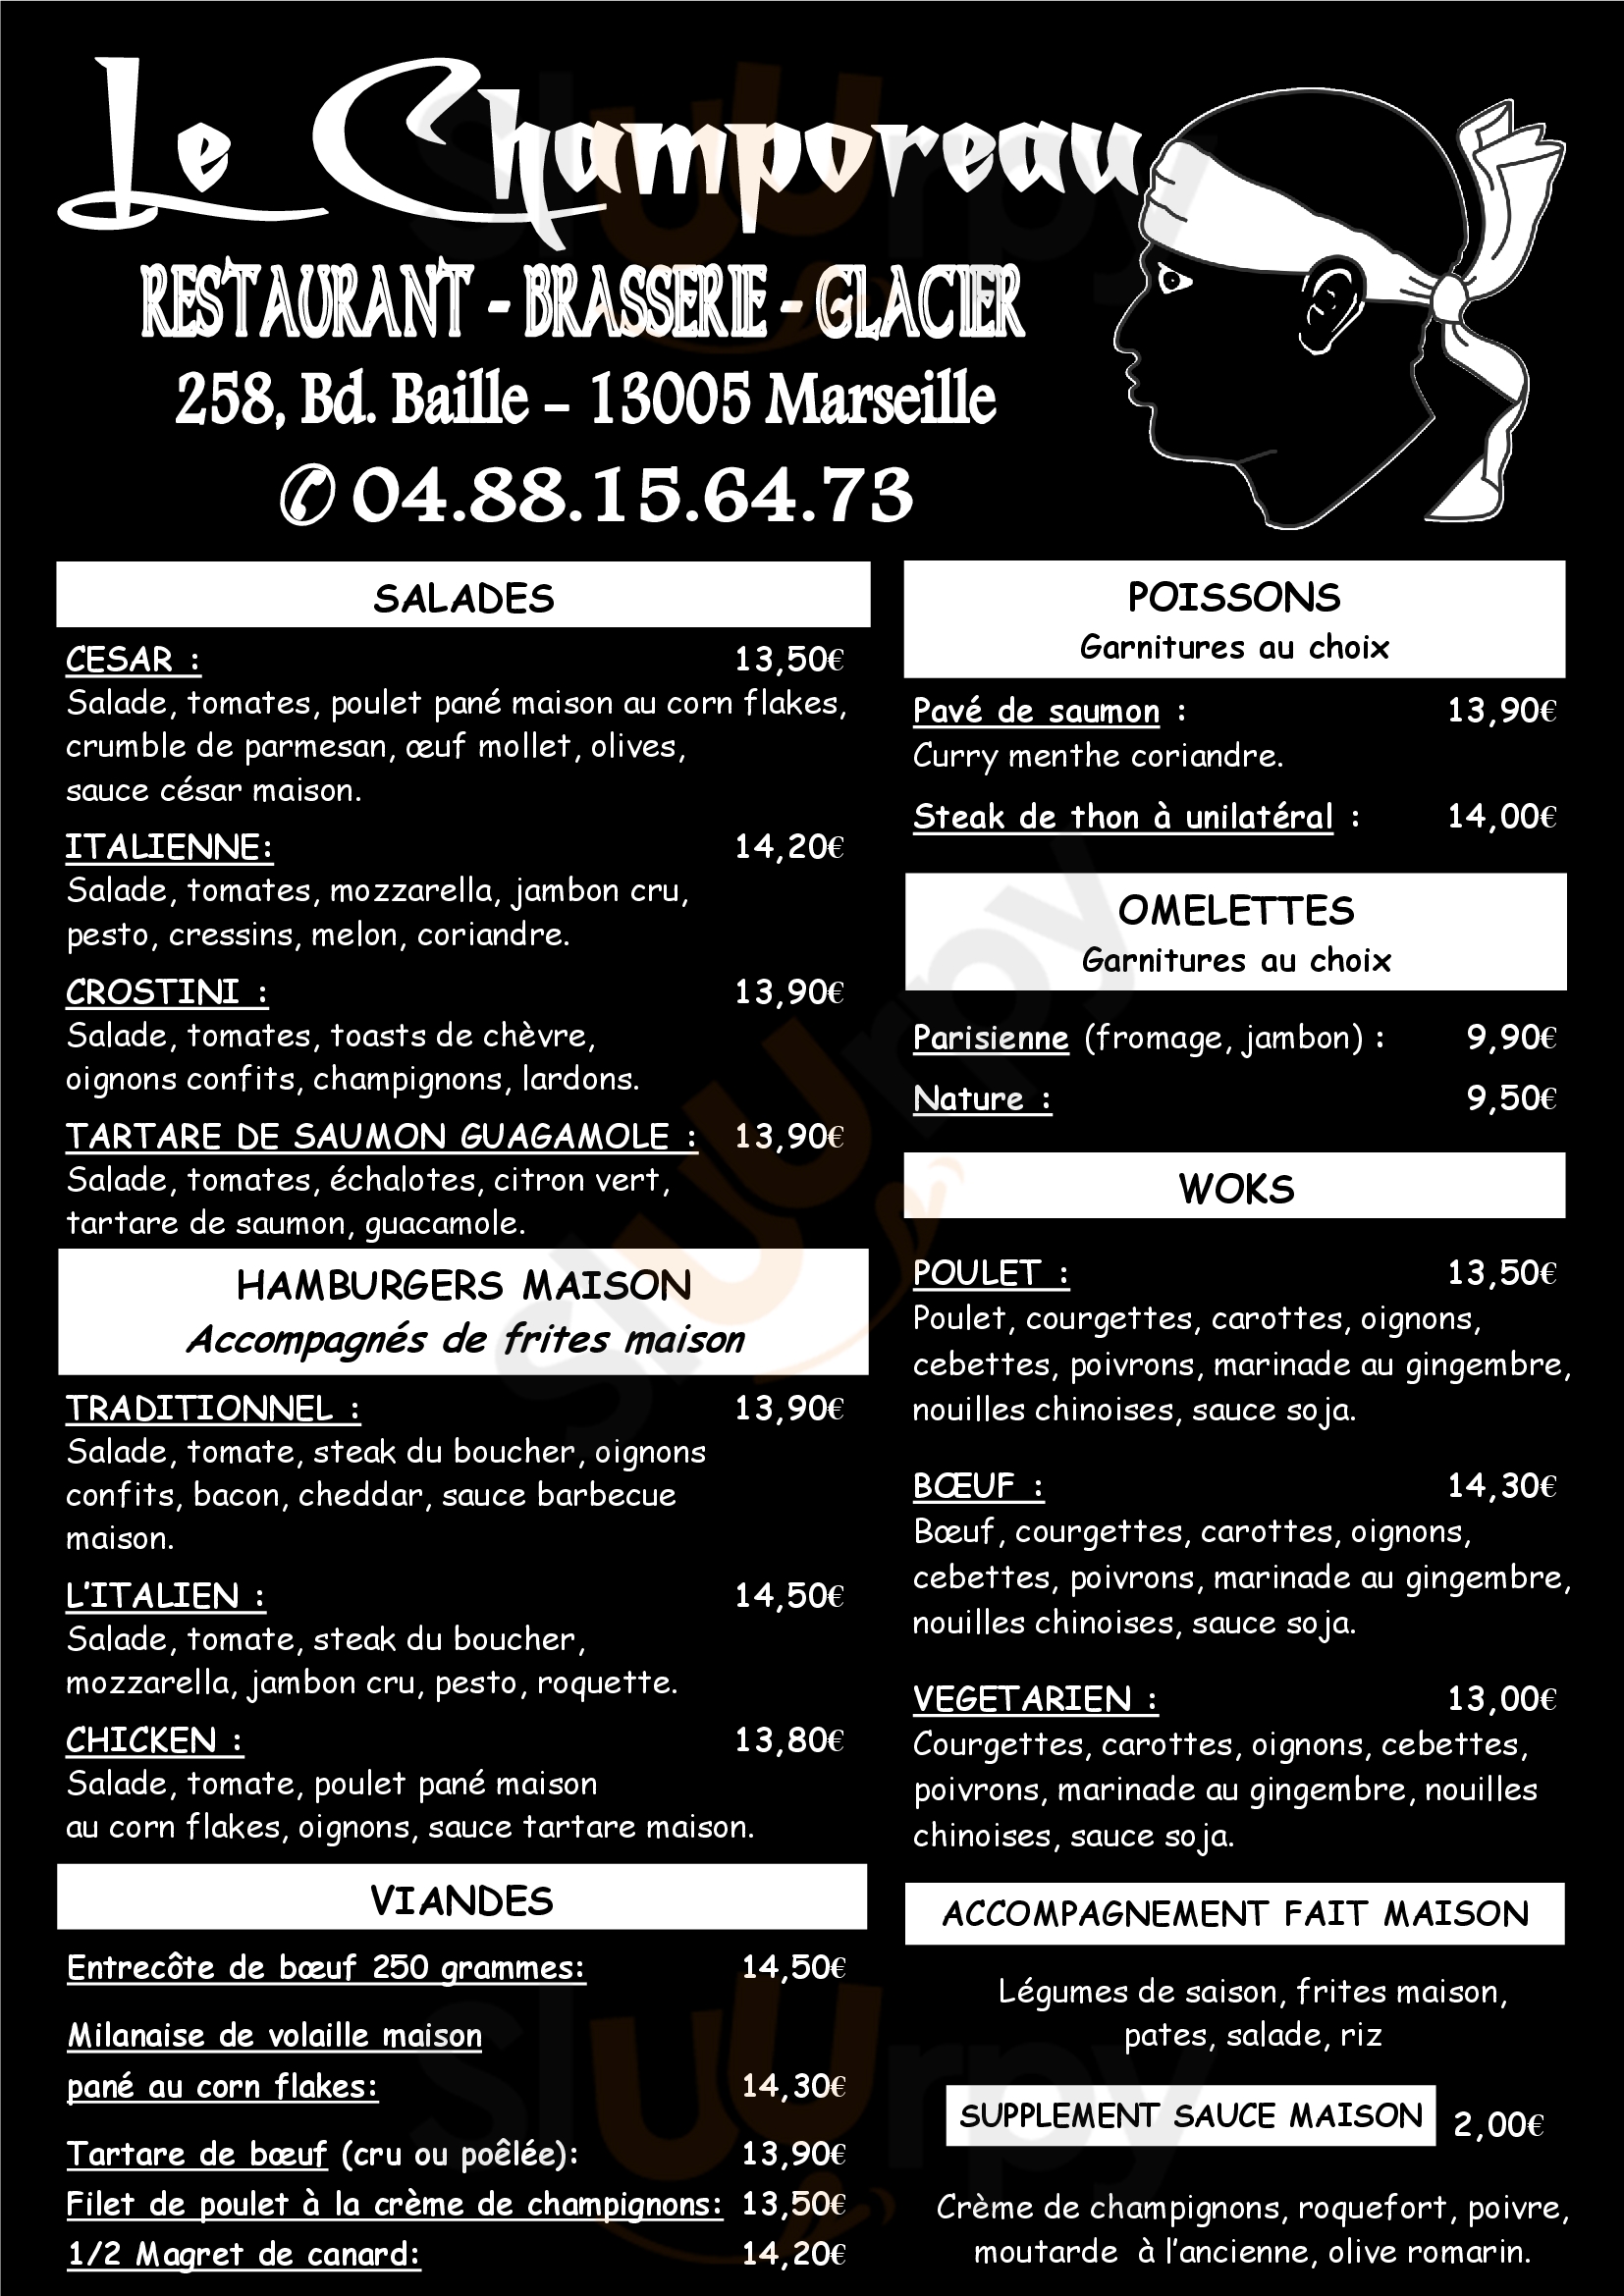 Le Champoreau Restaurant Brasserie Marseille Menu - 1